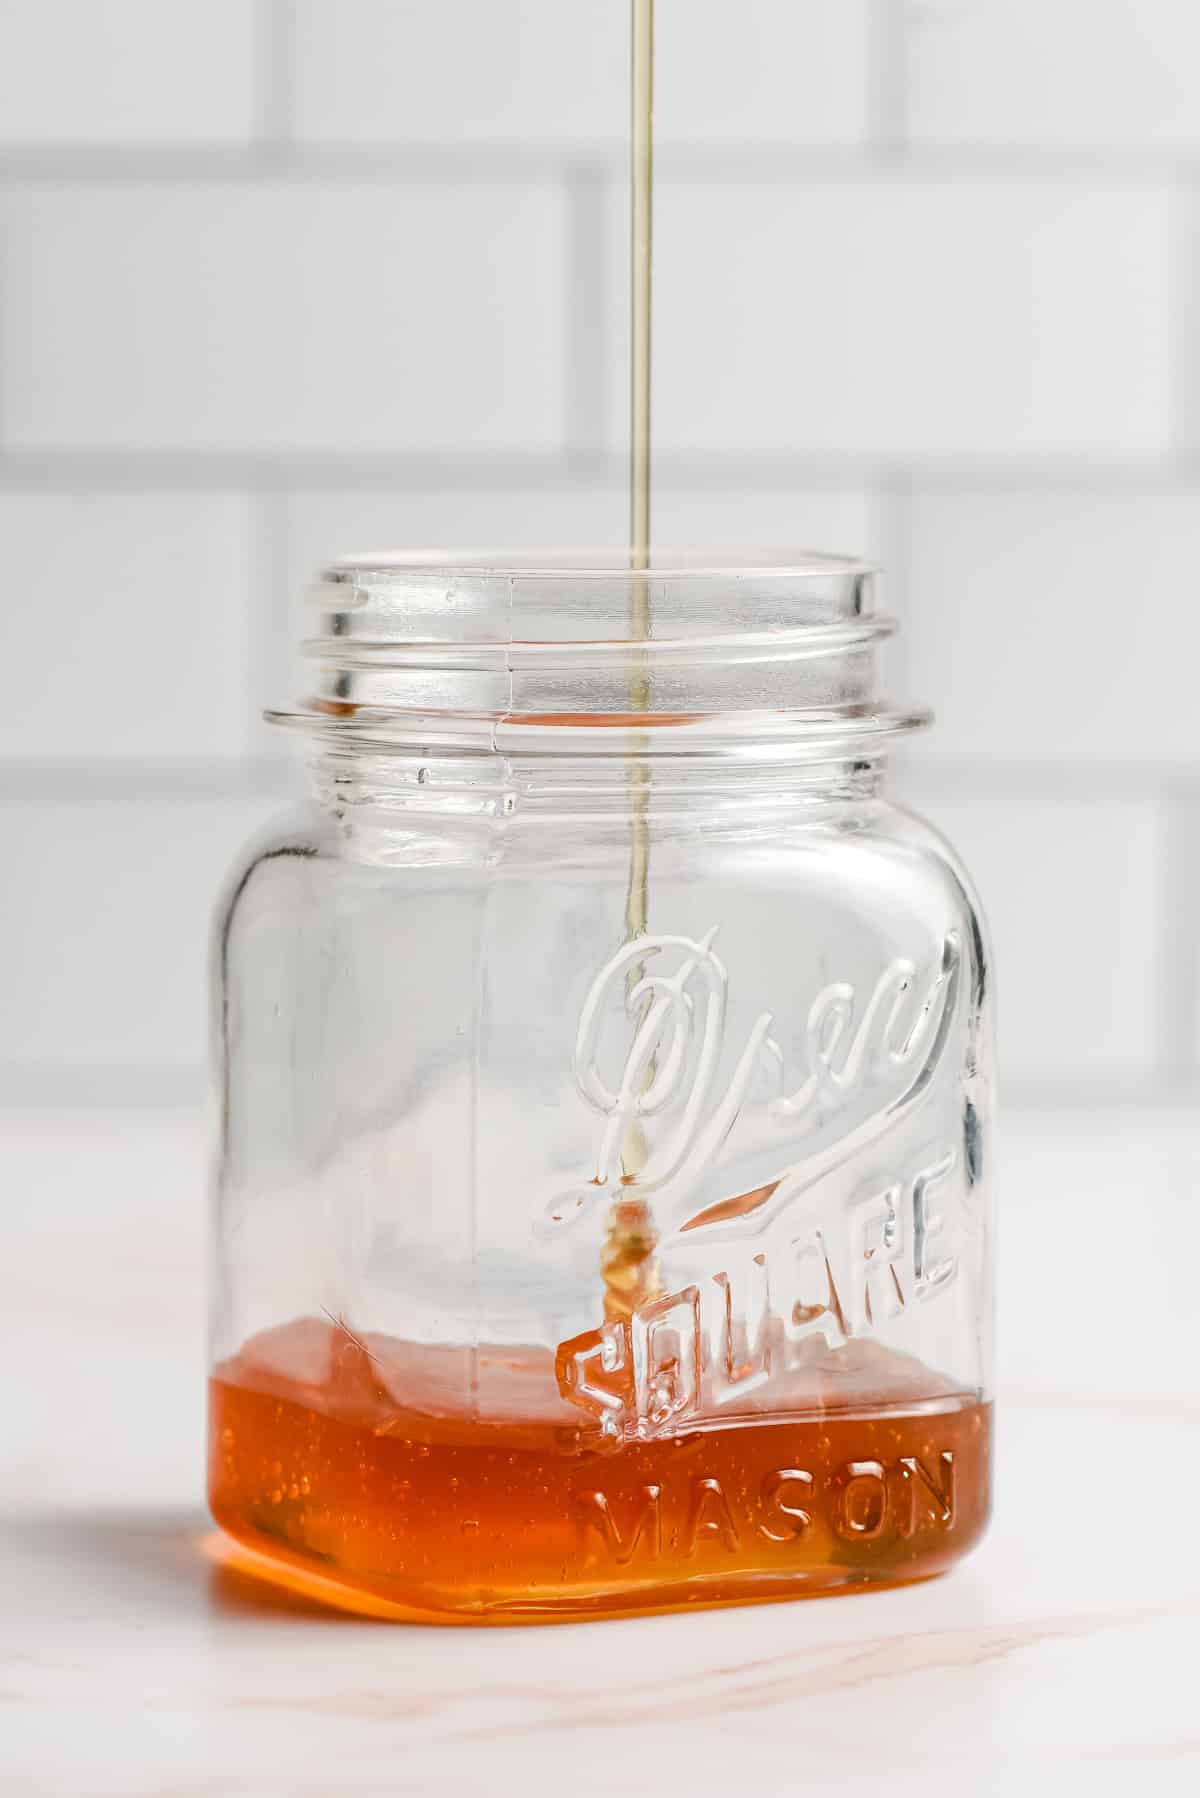 Honey being poured into a glass mason jar.